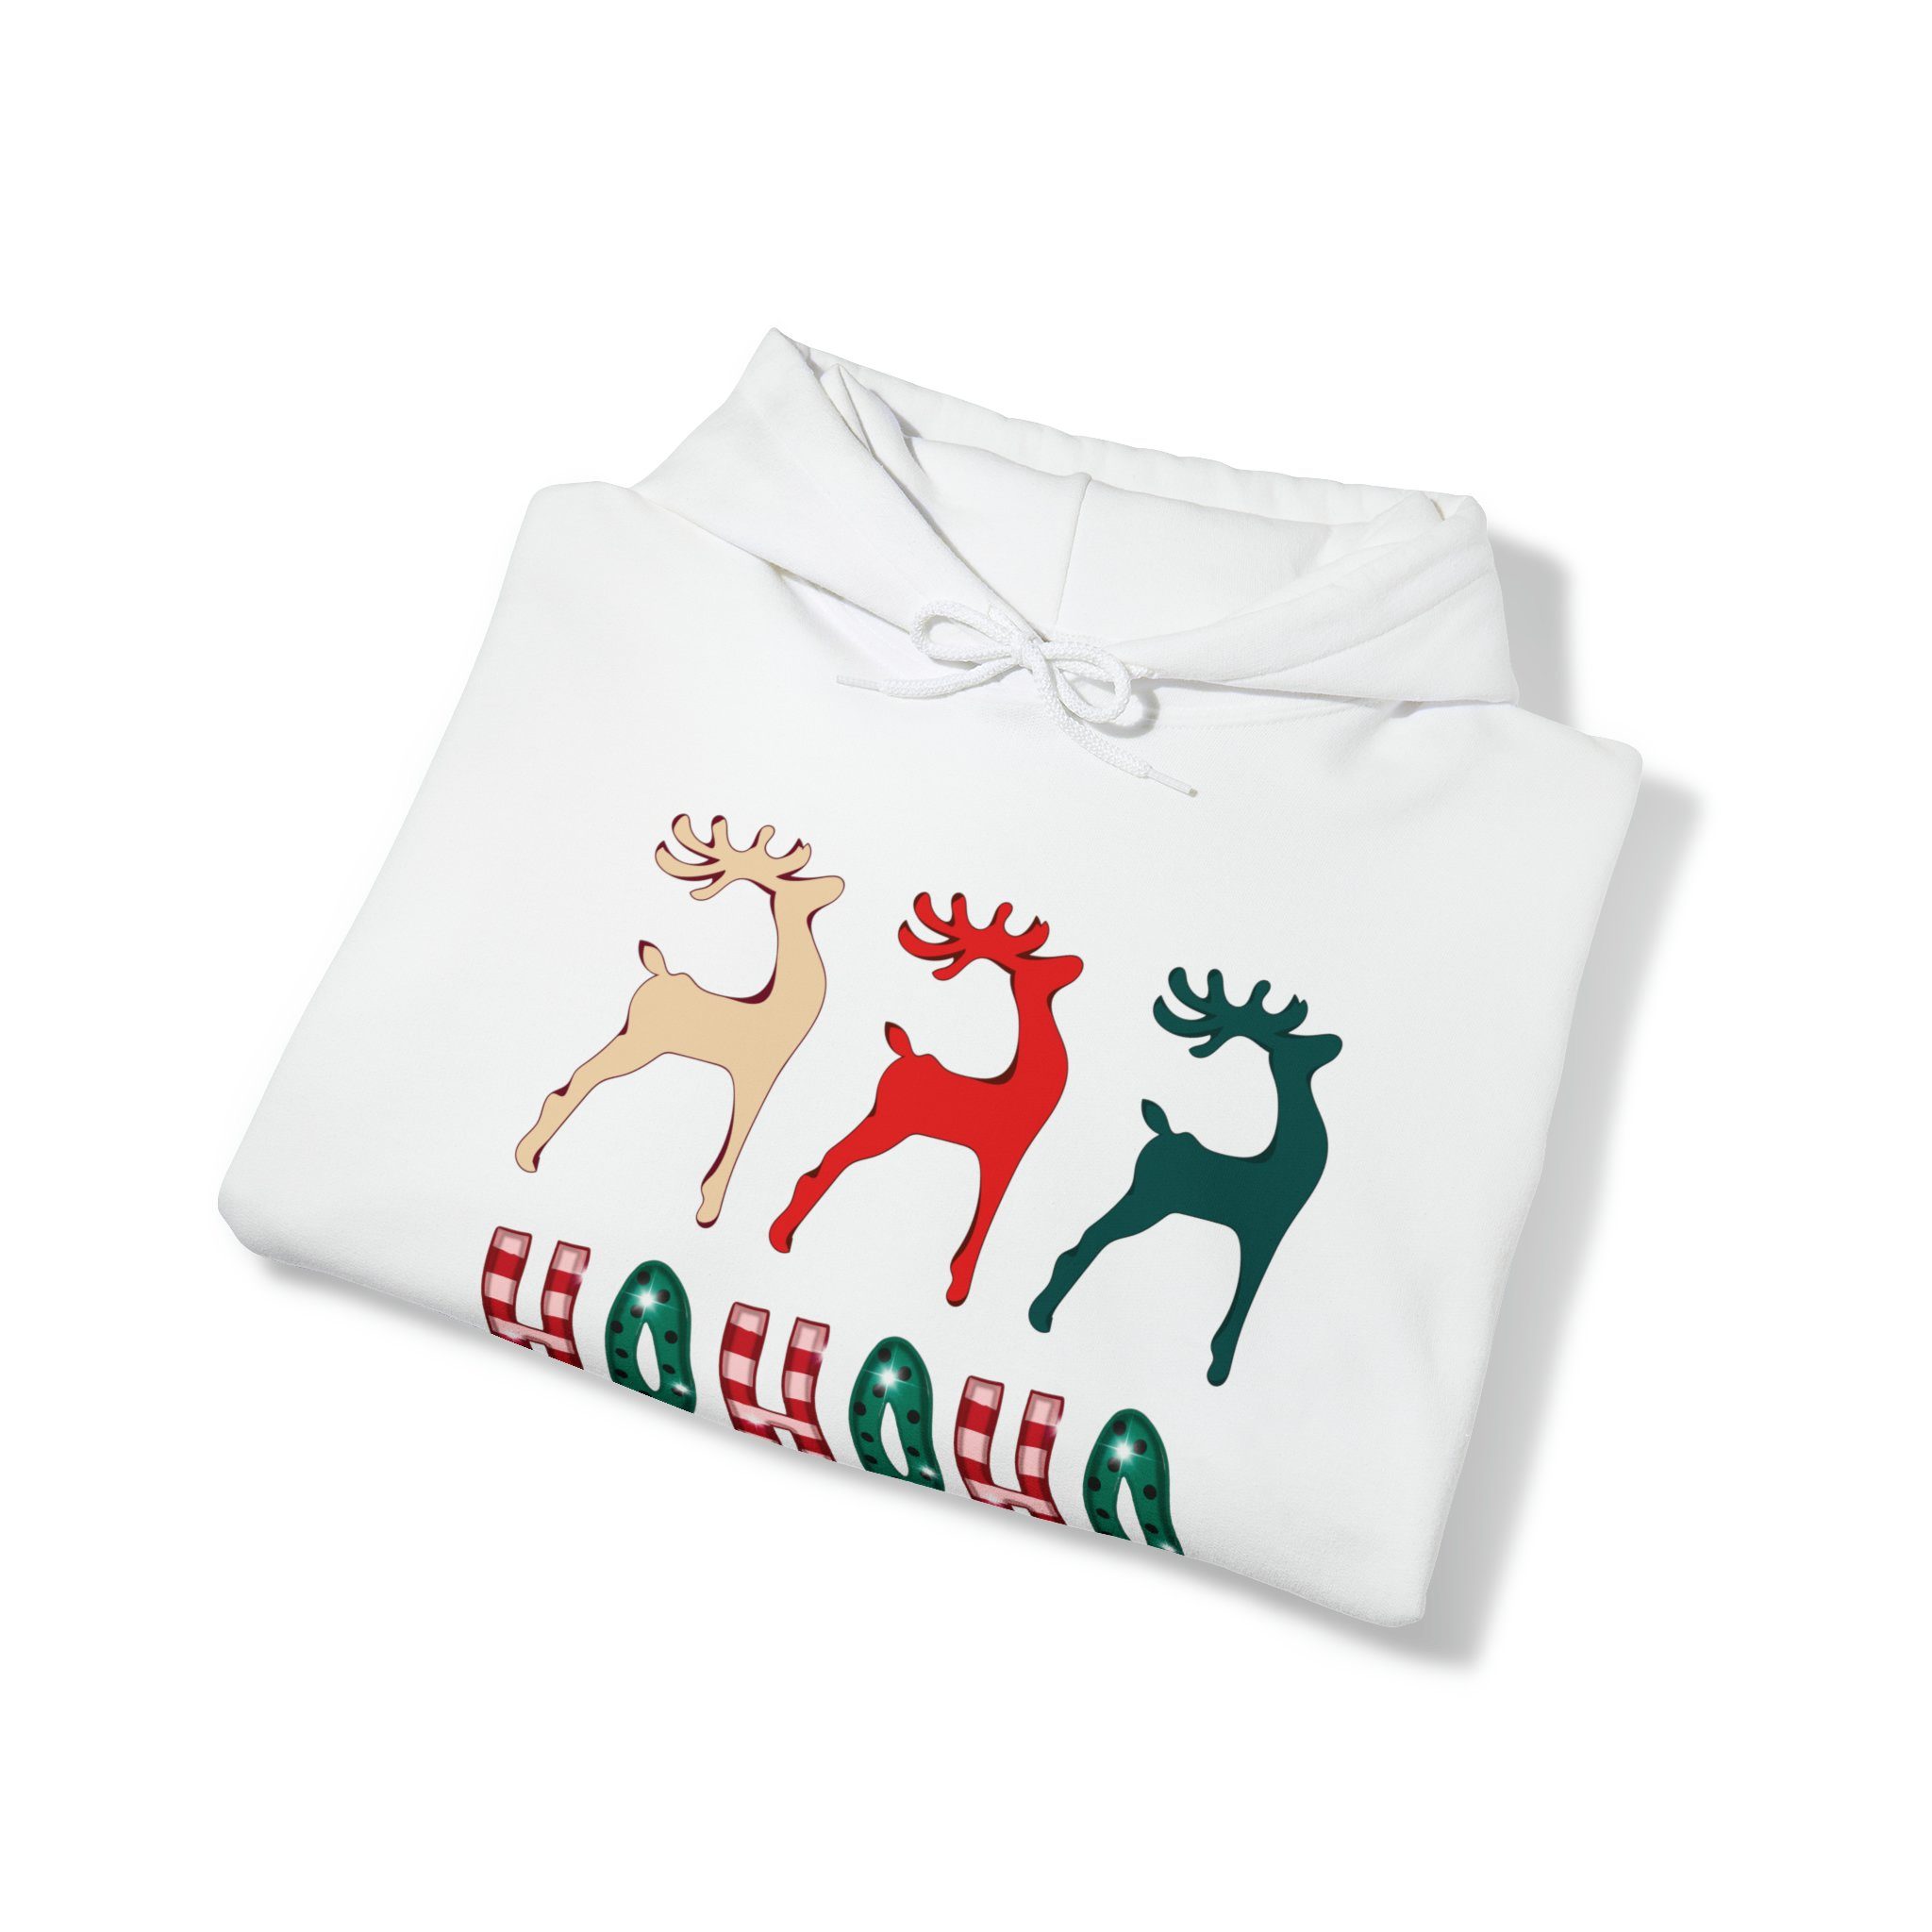 Christmas Quality Reindeer Hoodie, White Sweatshirt Weihnachtssweatshirt Men Women Elegance Christmas